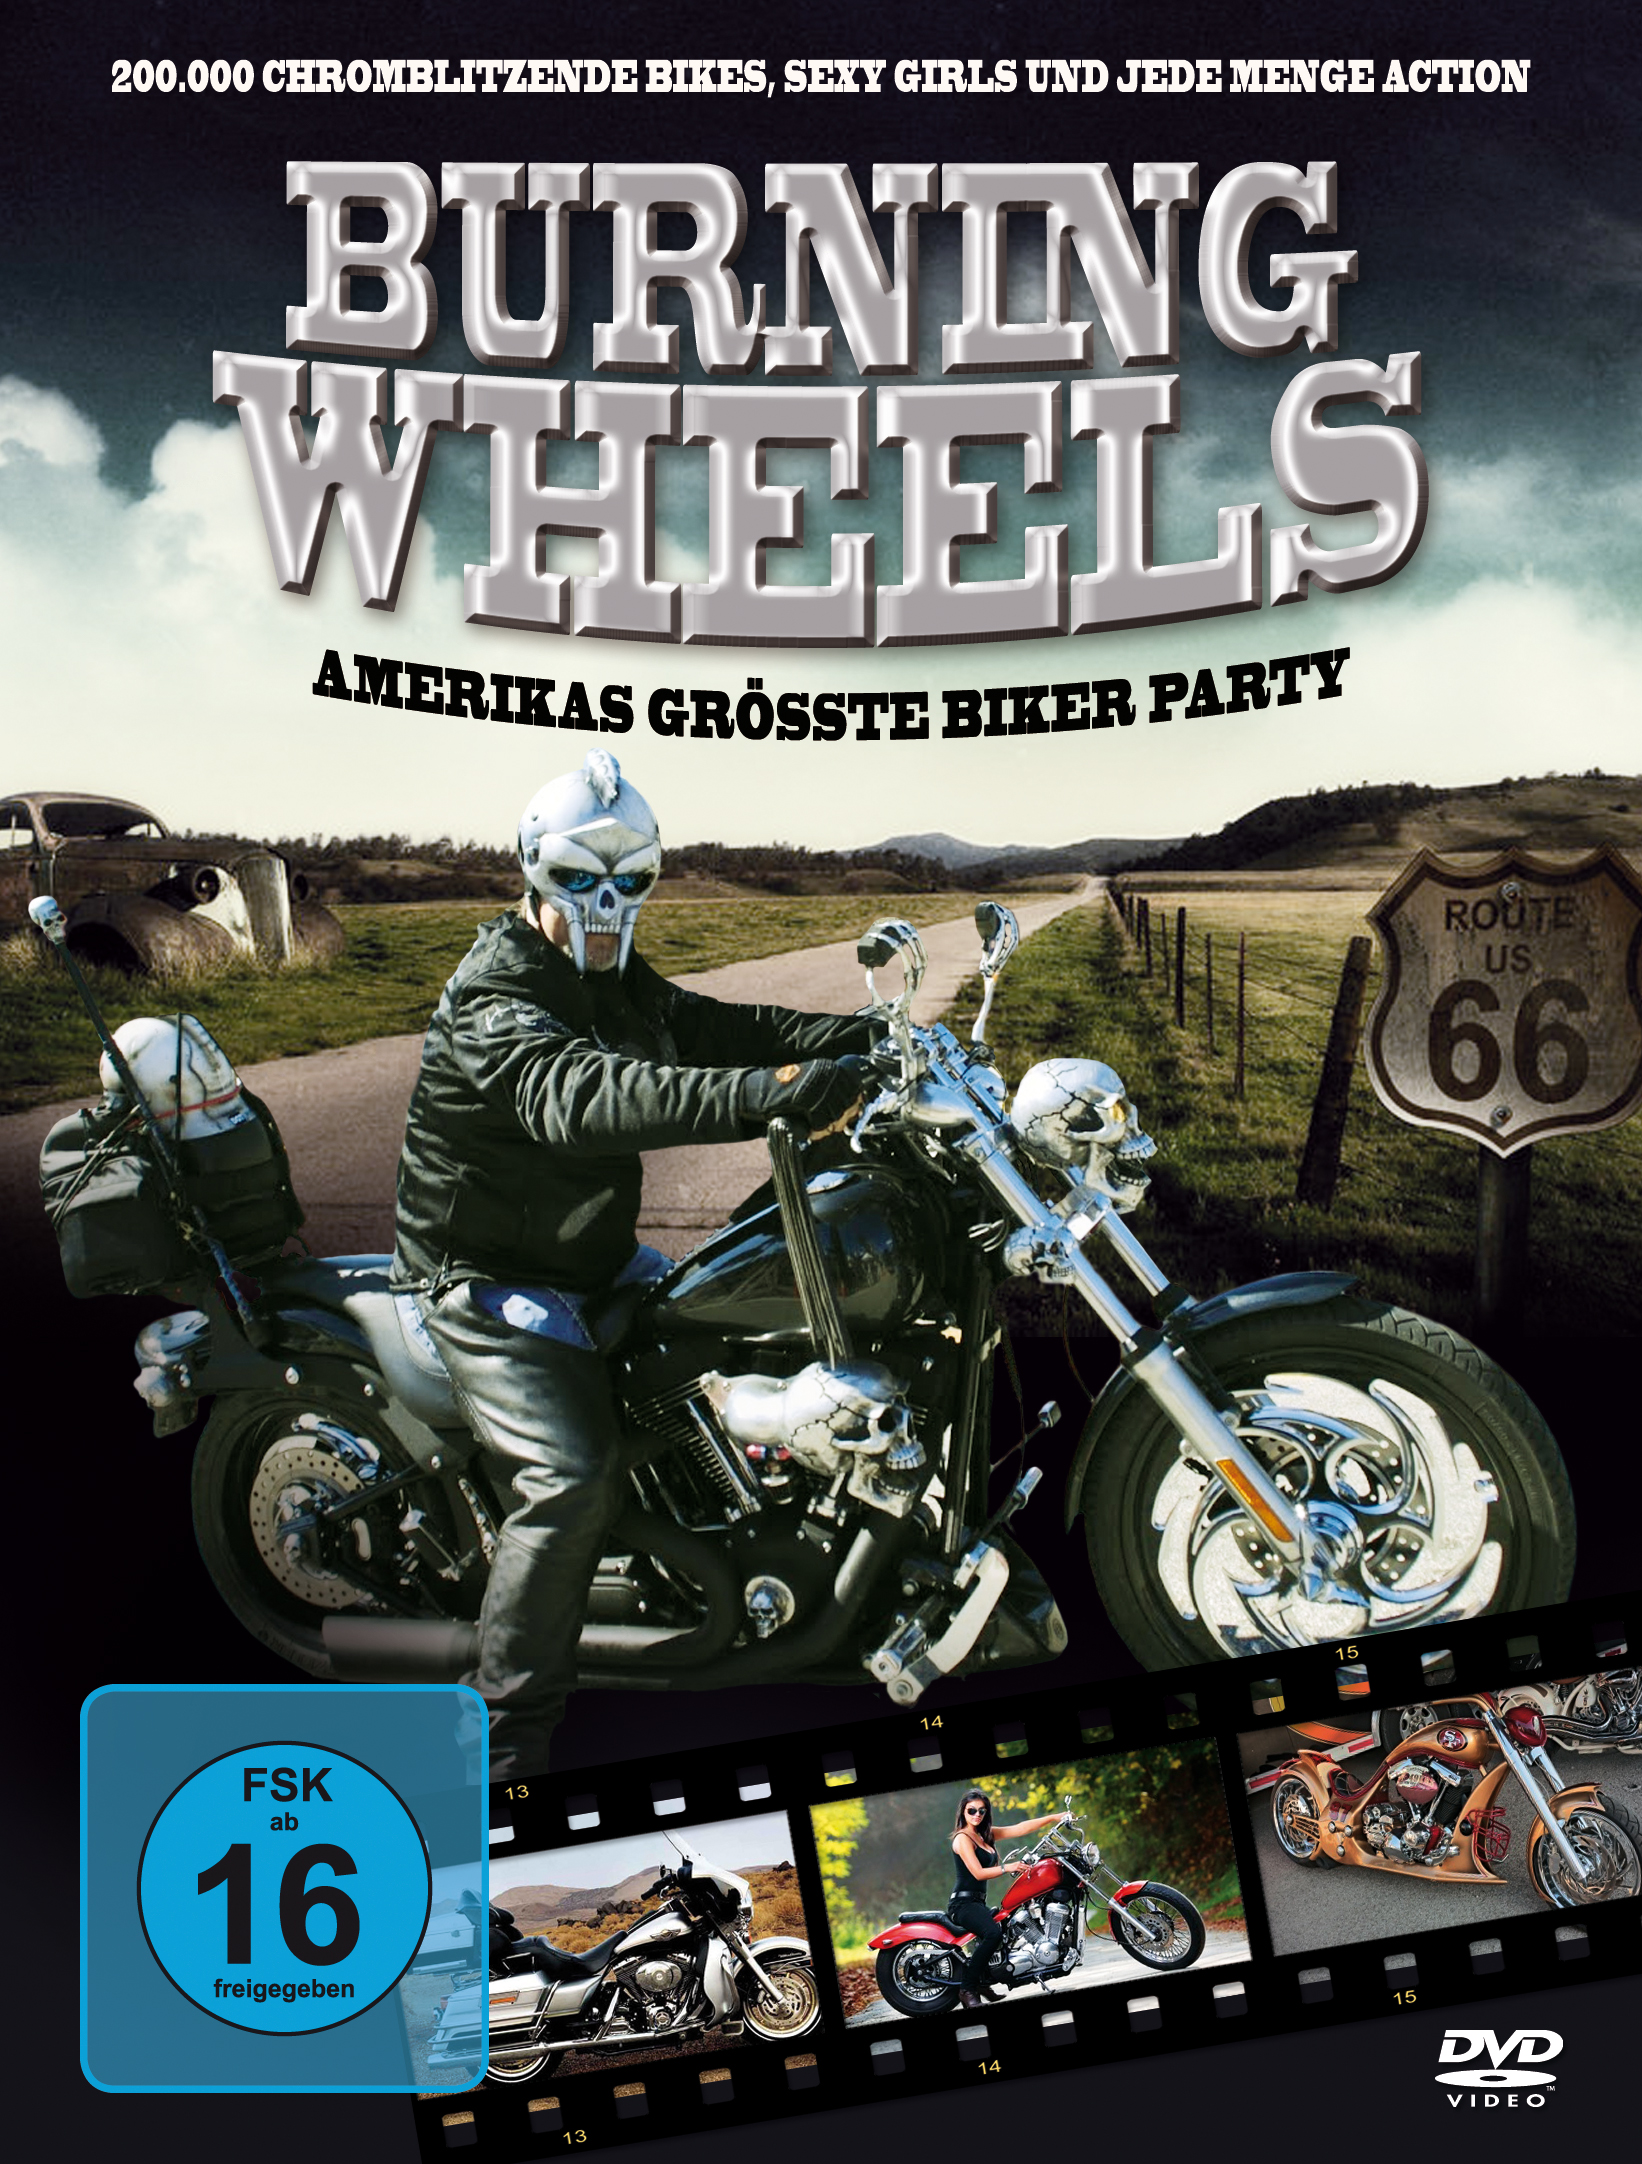 Wheels DVD Party Biker - Burning Amerikas größte